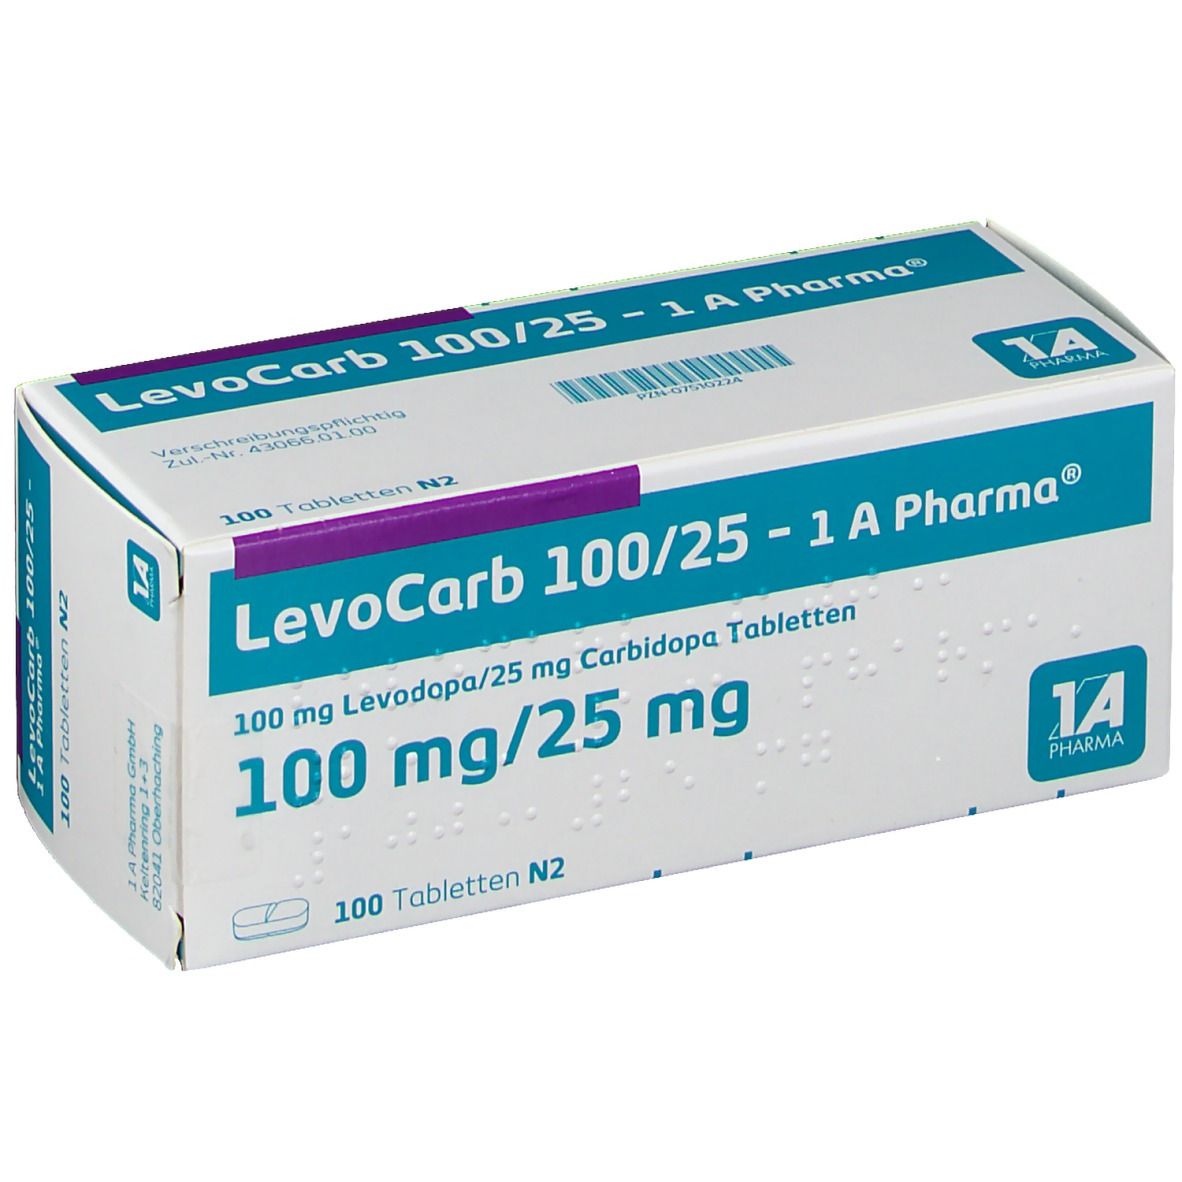 Levocarb 100/25 1A Pharma®